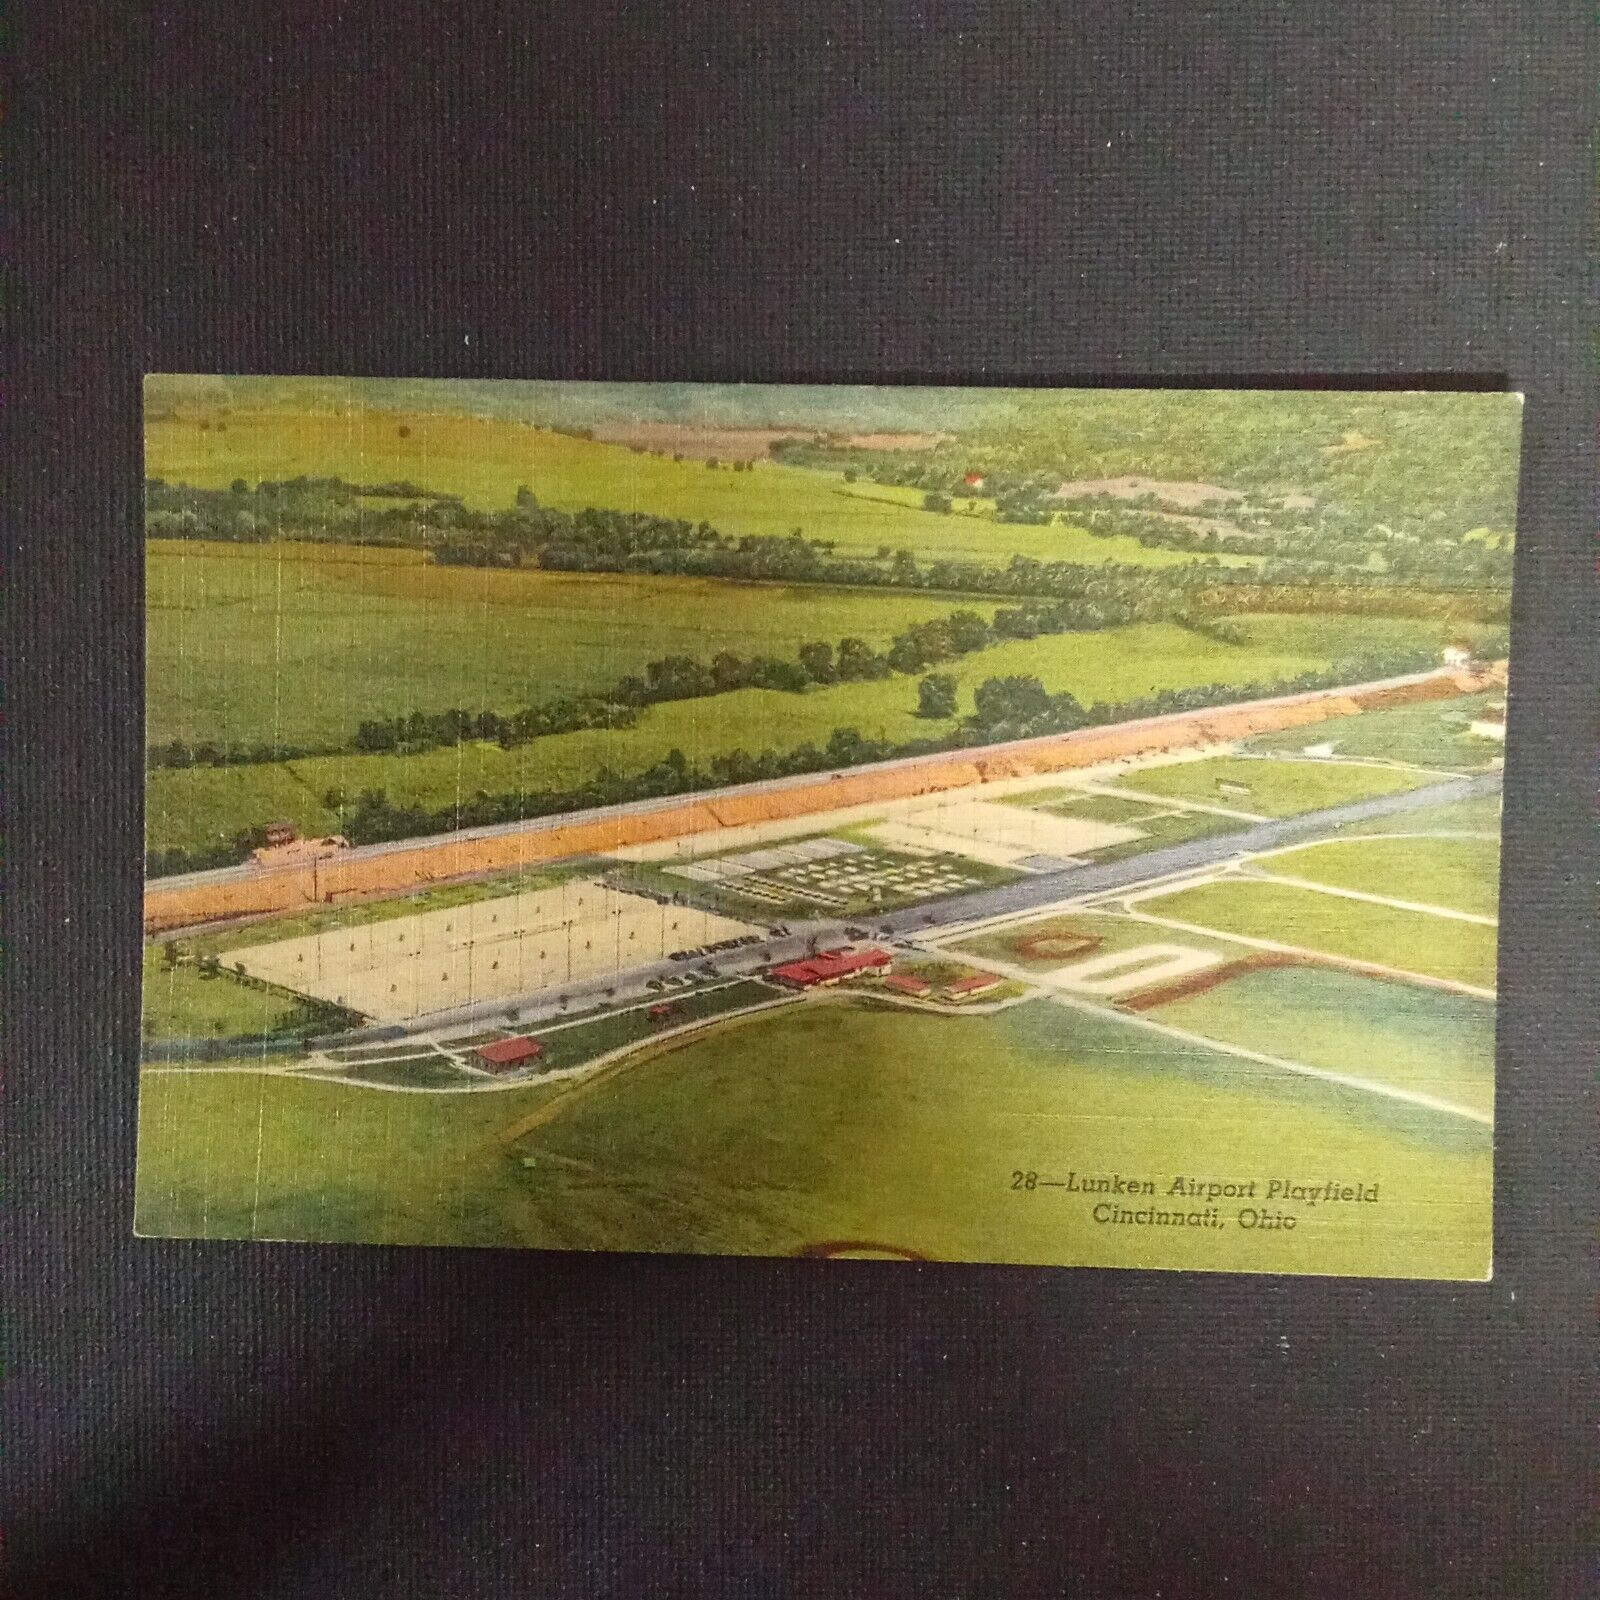 Cincinnati Ohio lunken Airport playfield Vintage Postcard